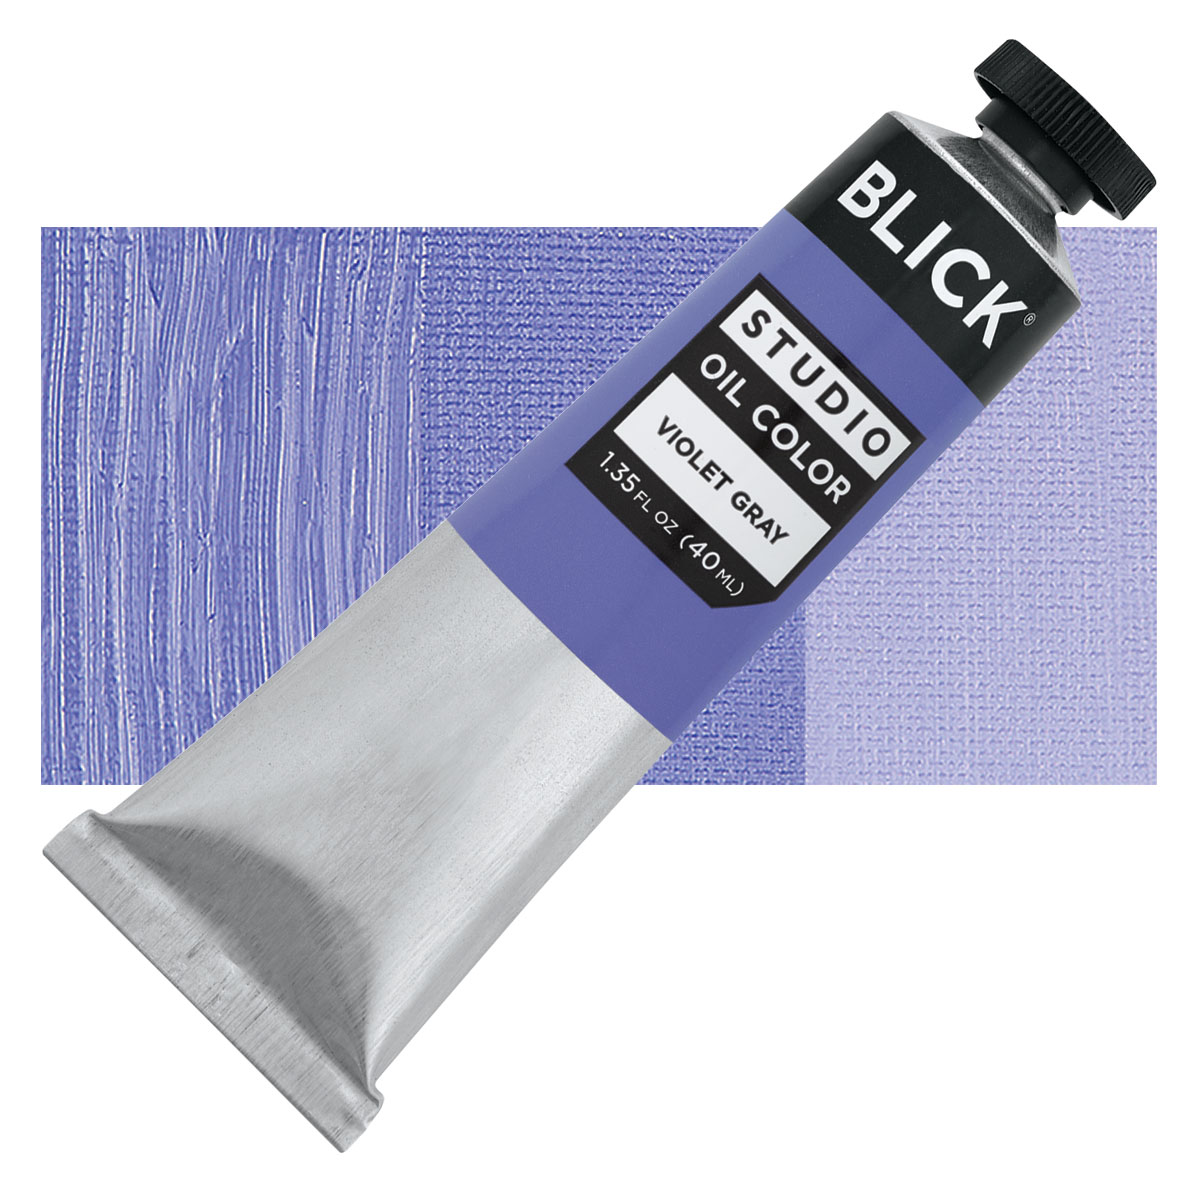 Blick Oil Colors – Violet Grey, 40 ml Tube